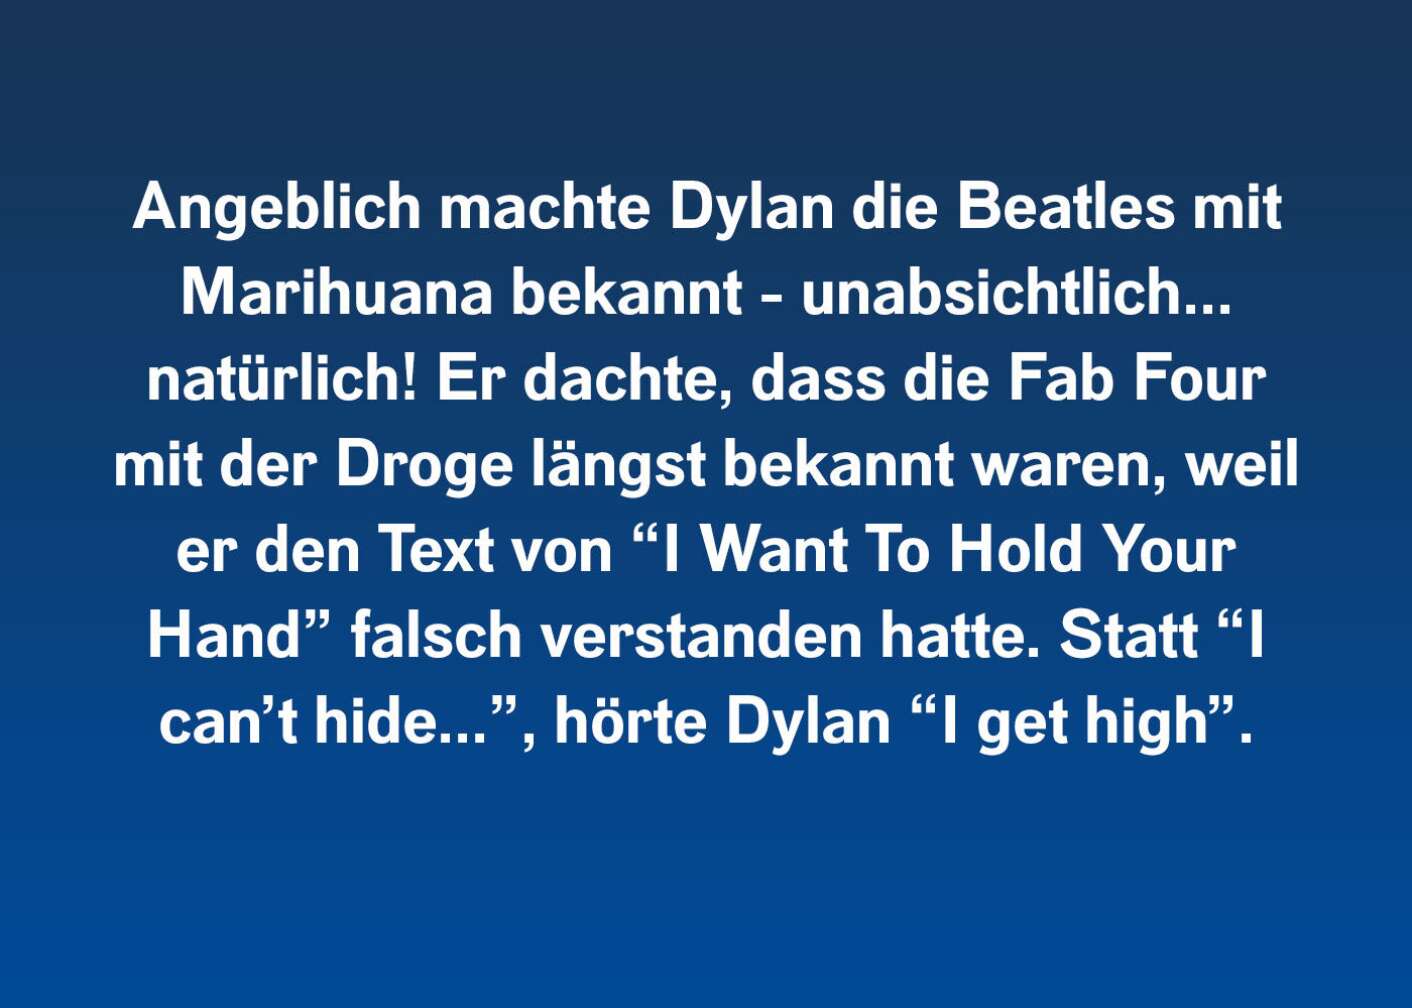 Fakt über Bob Dylan als Fließtext